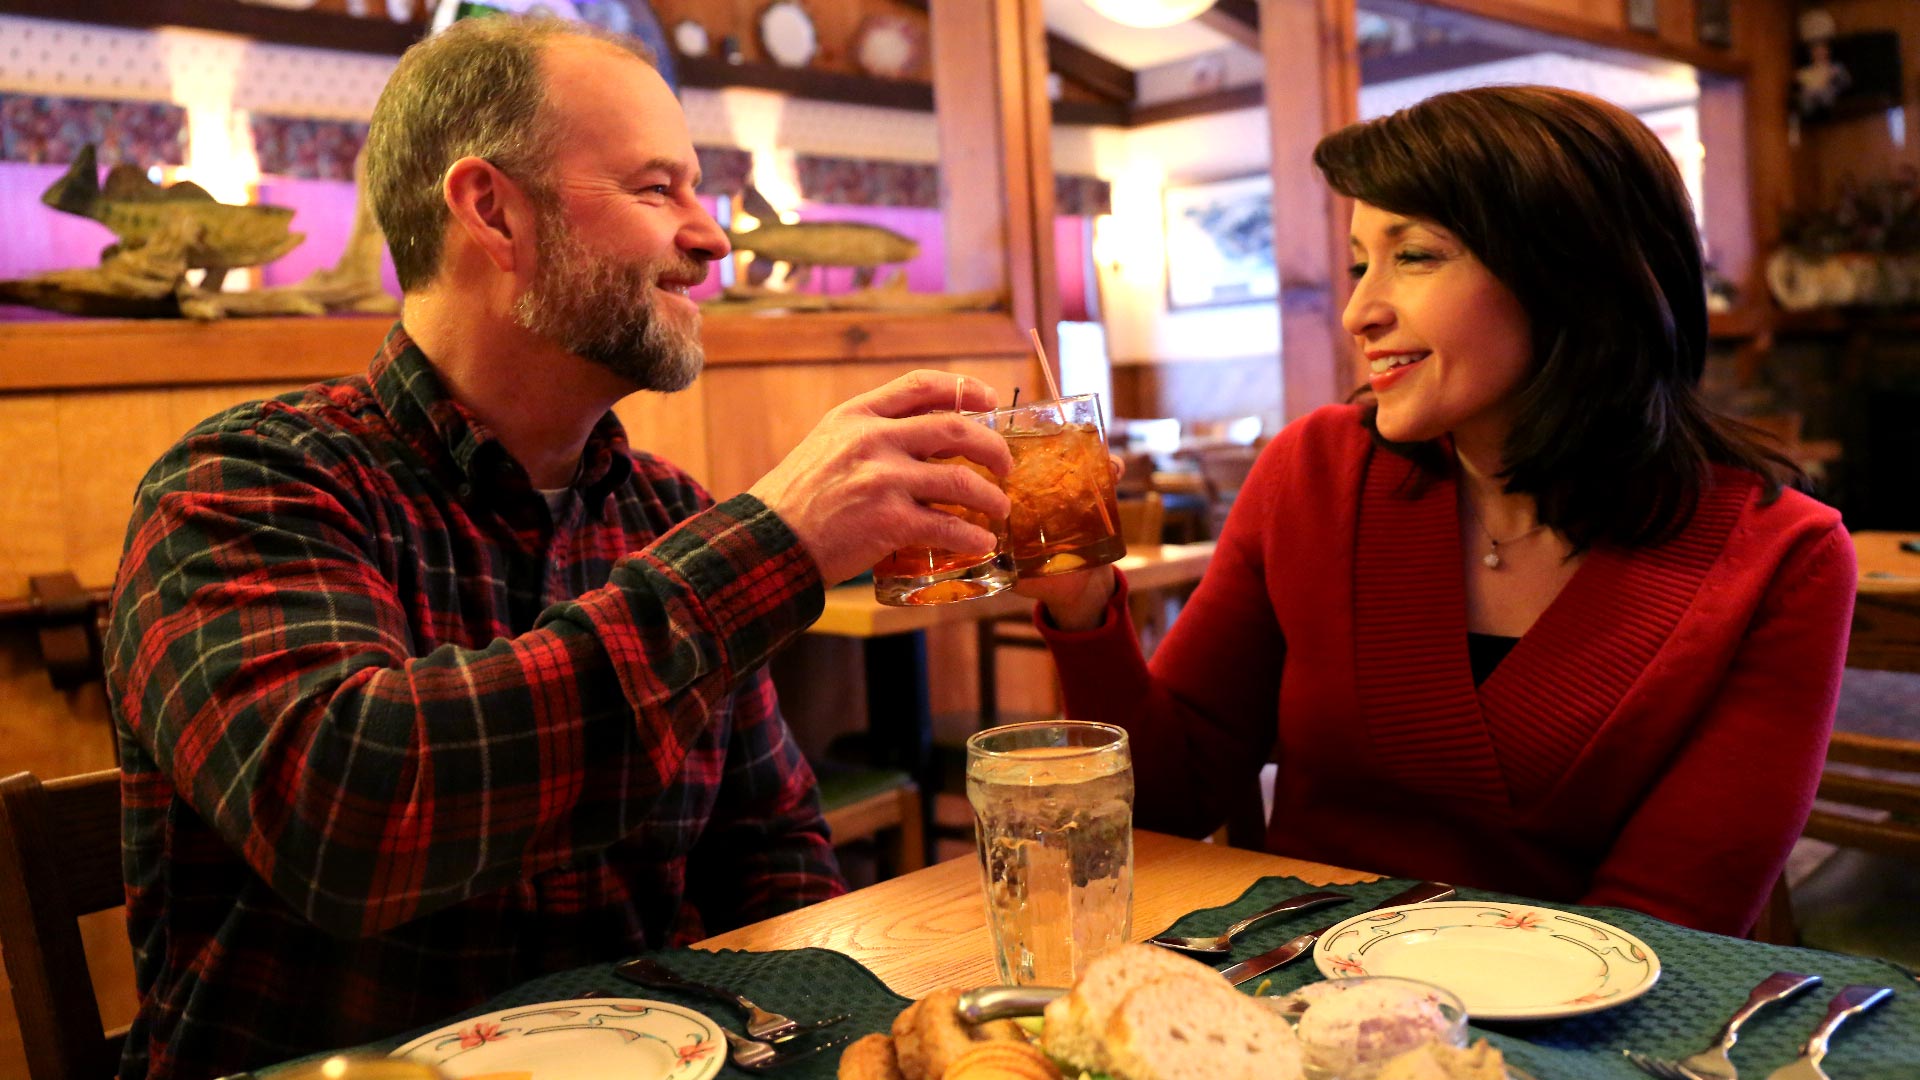 Couple enjoys after dinner drinks in rustic restaurant interior